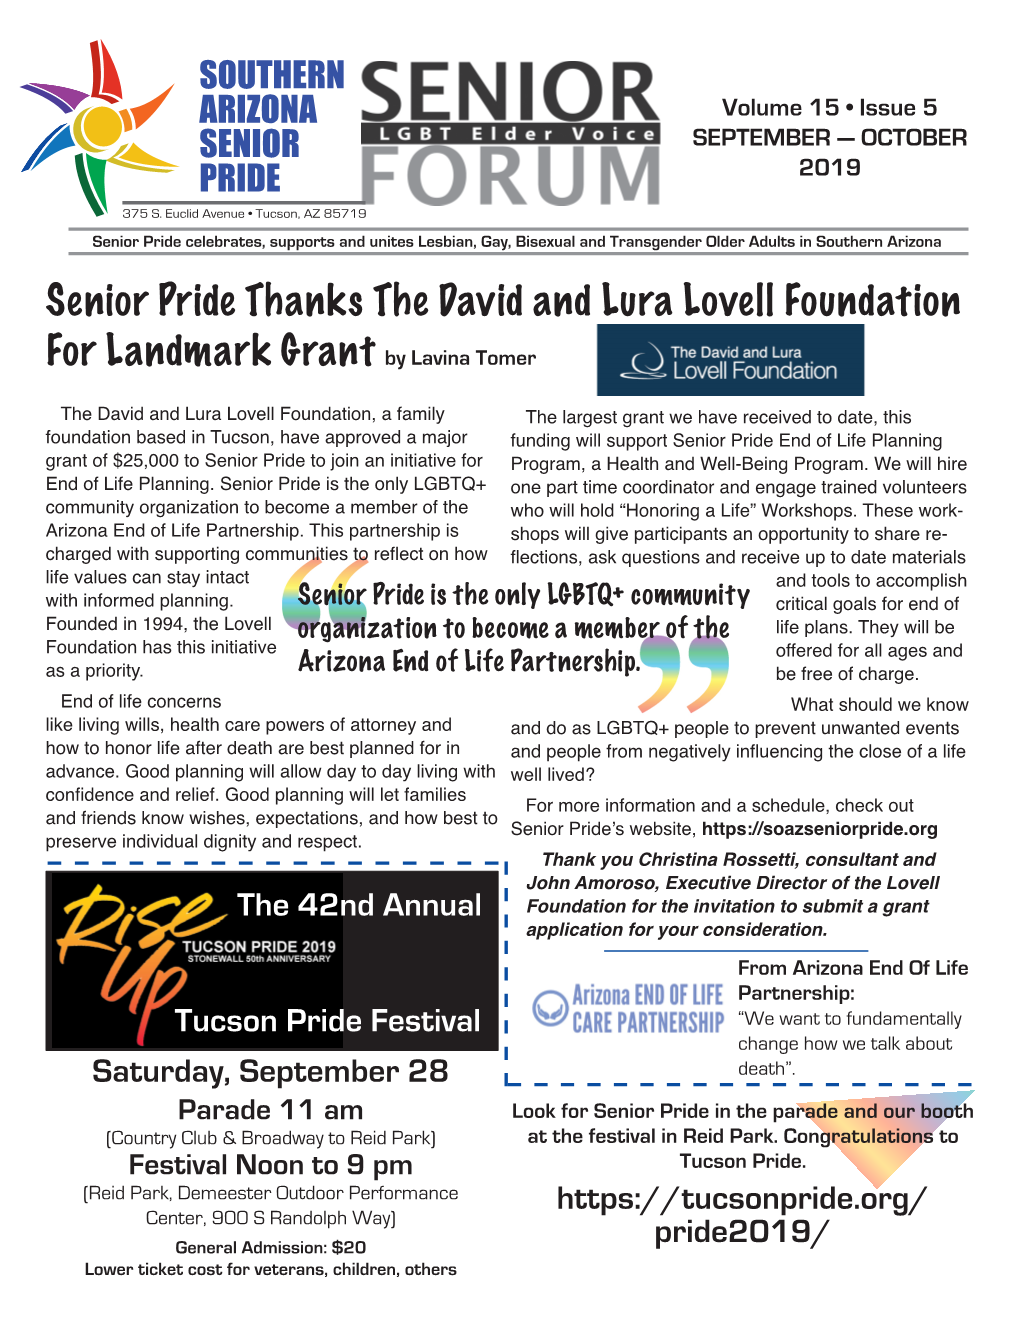 Senior Pride Thanks the David and Lura Lovell Foundation for Landmark Grant by Lavina Tomer